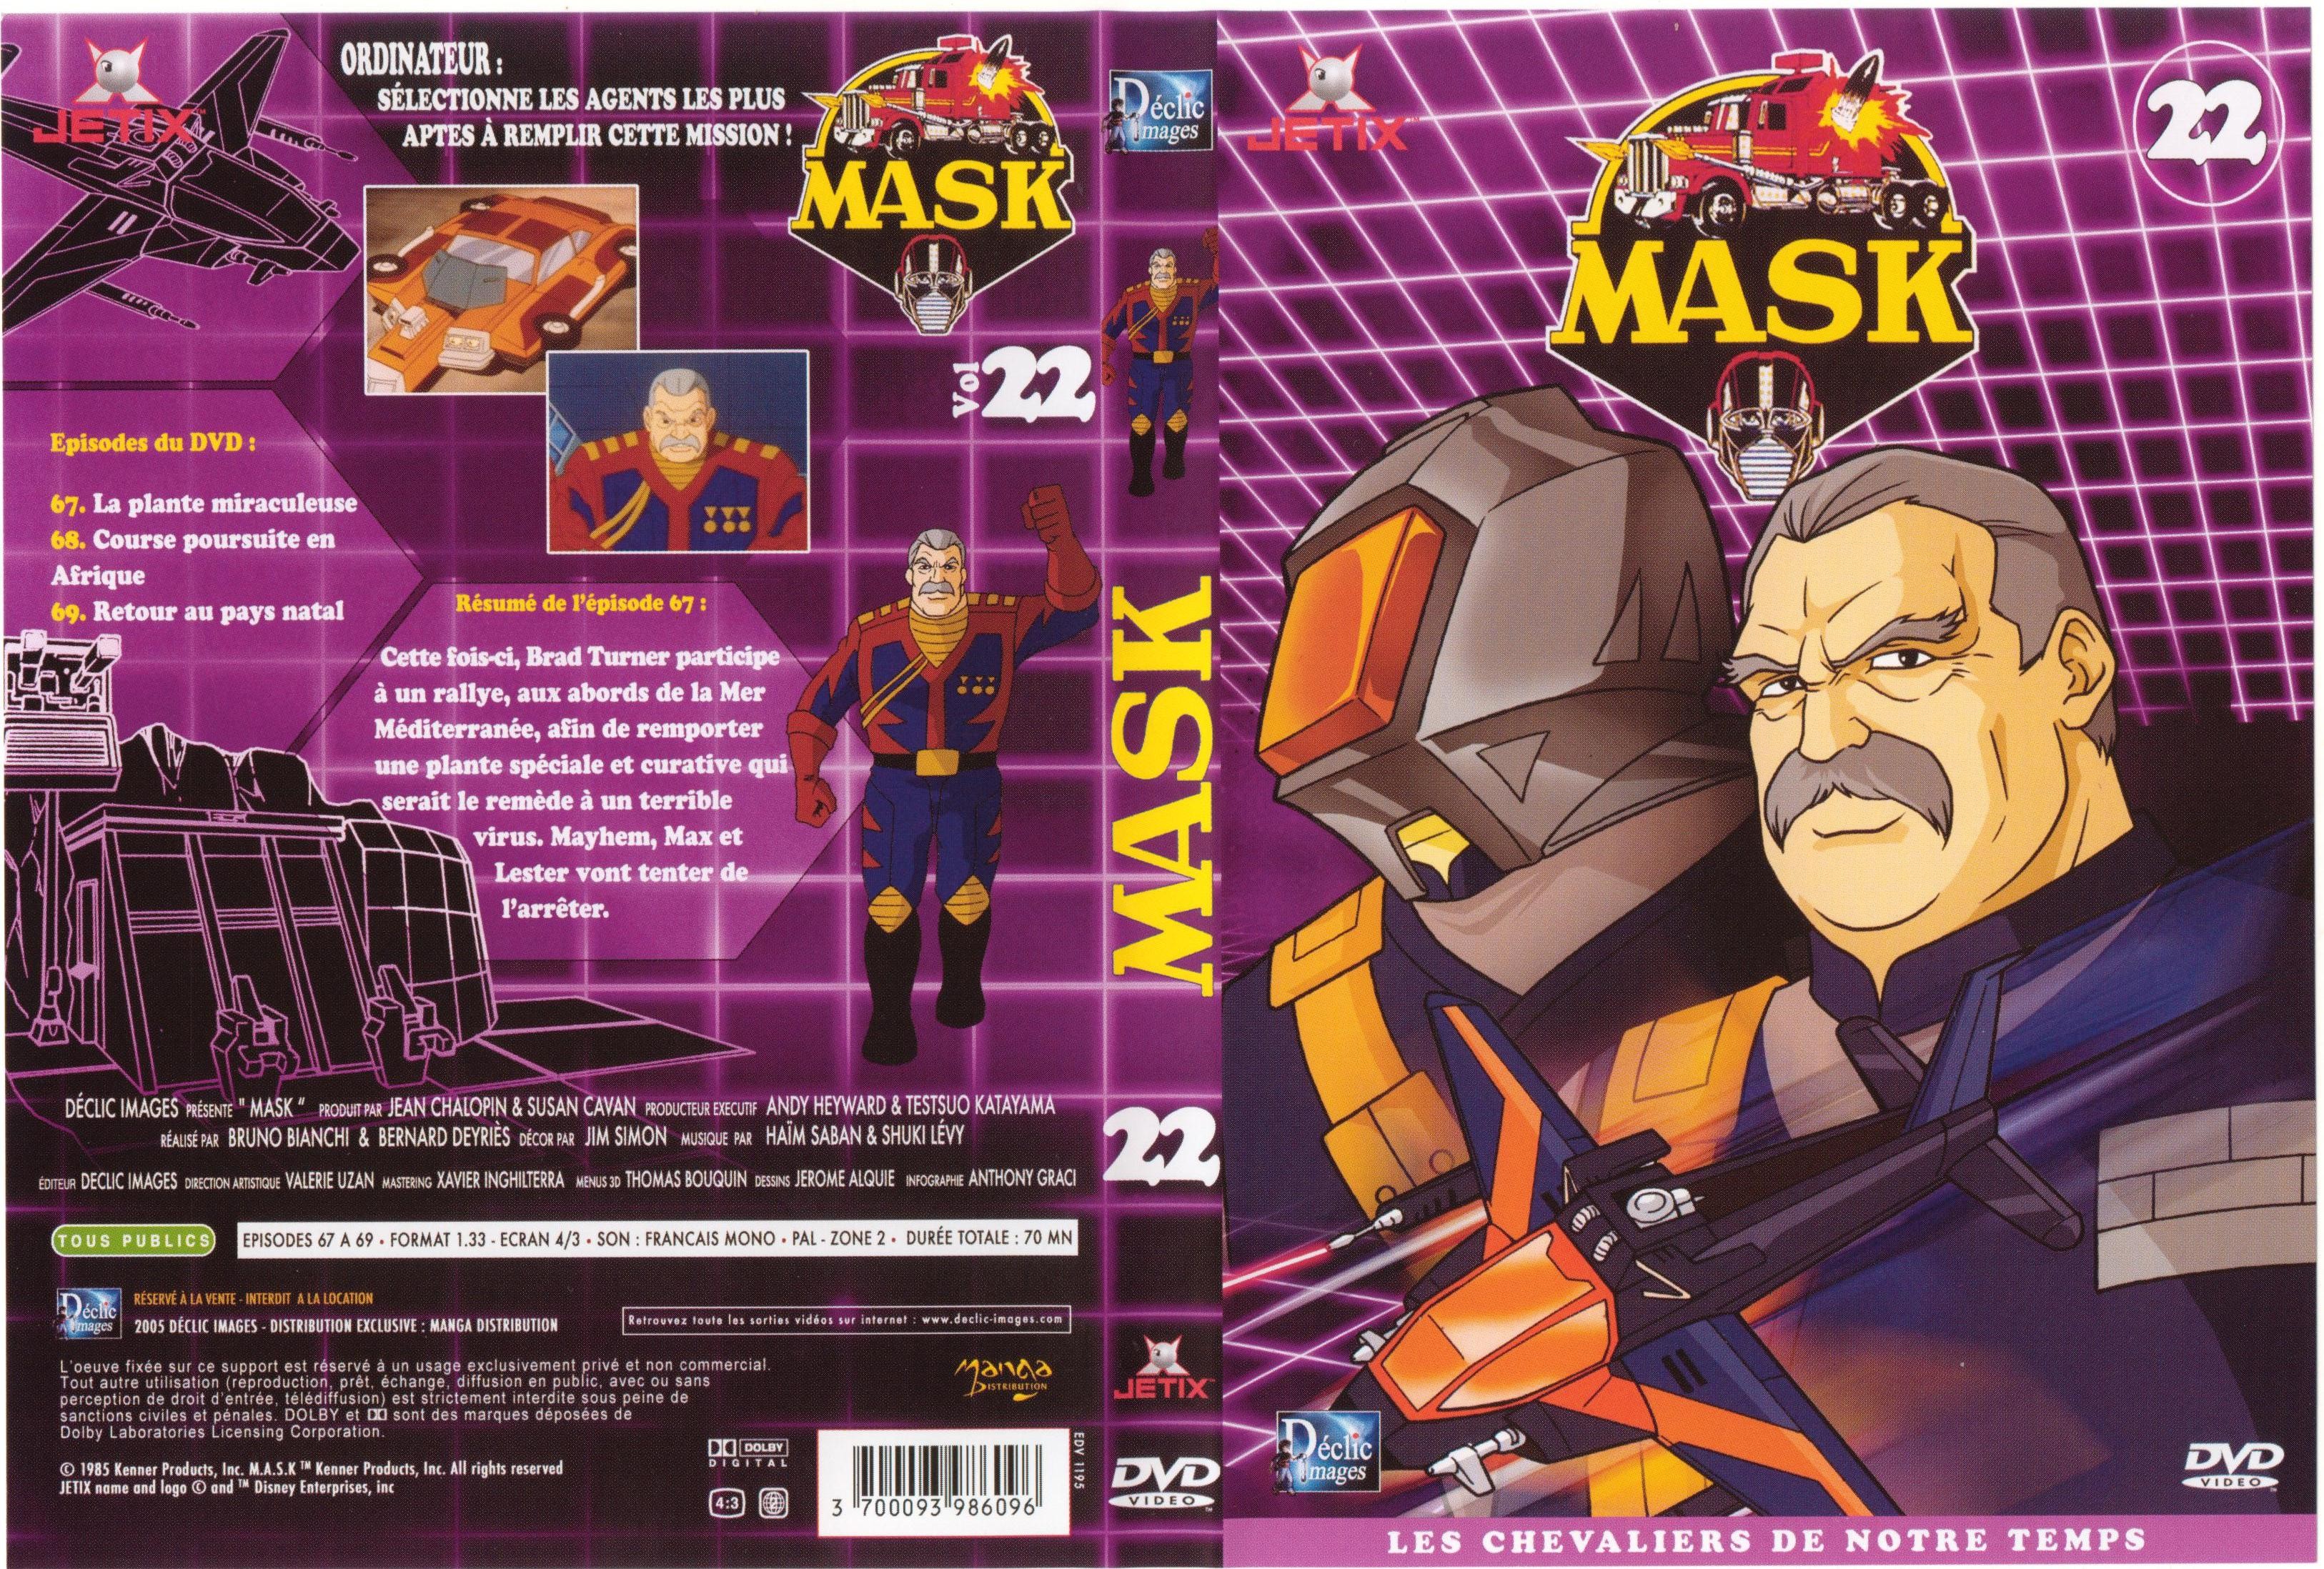 Jaquette DVD Mask vol 22